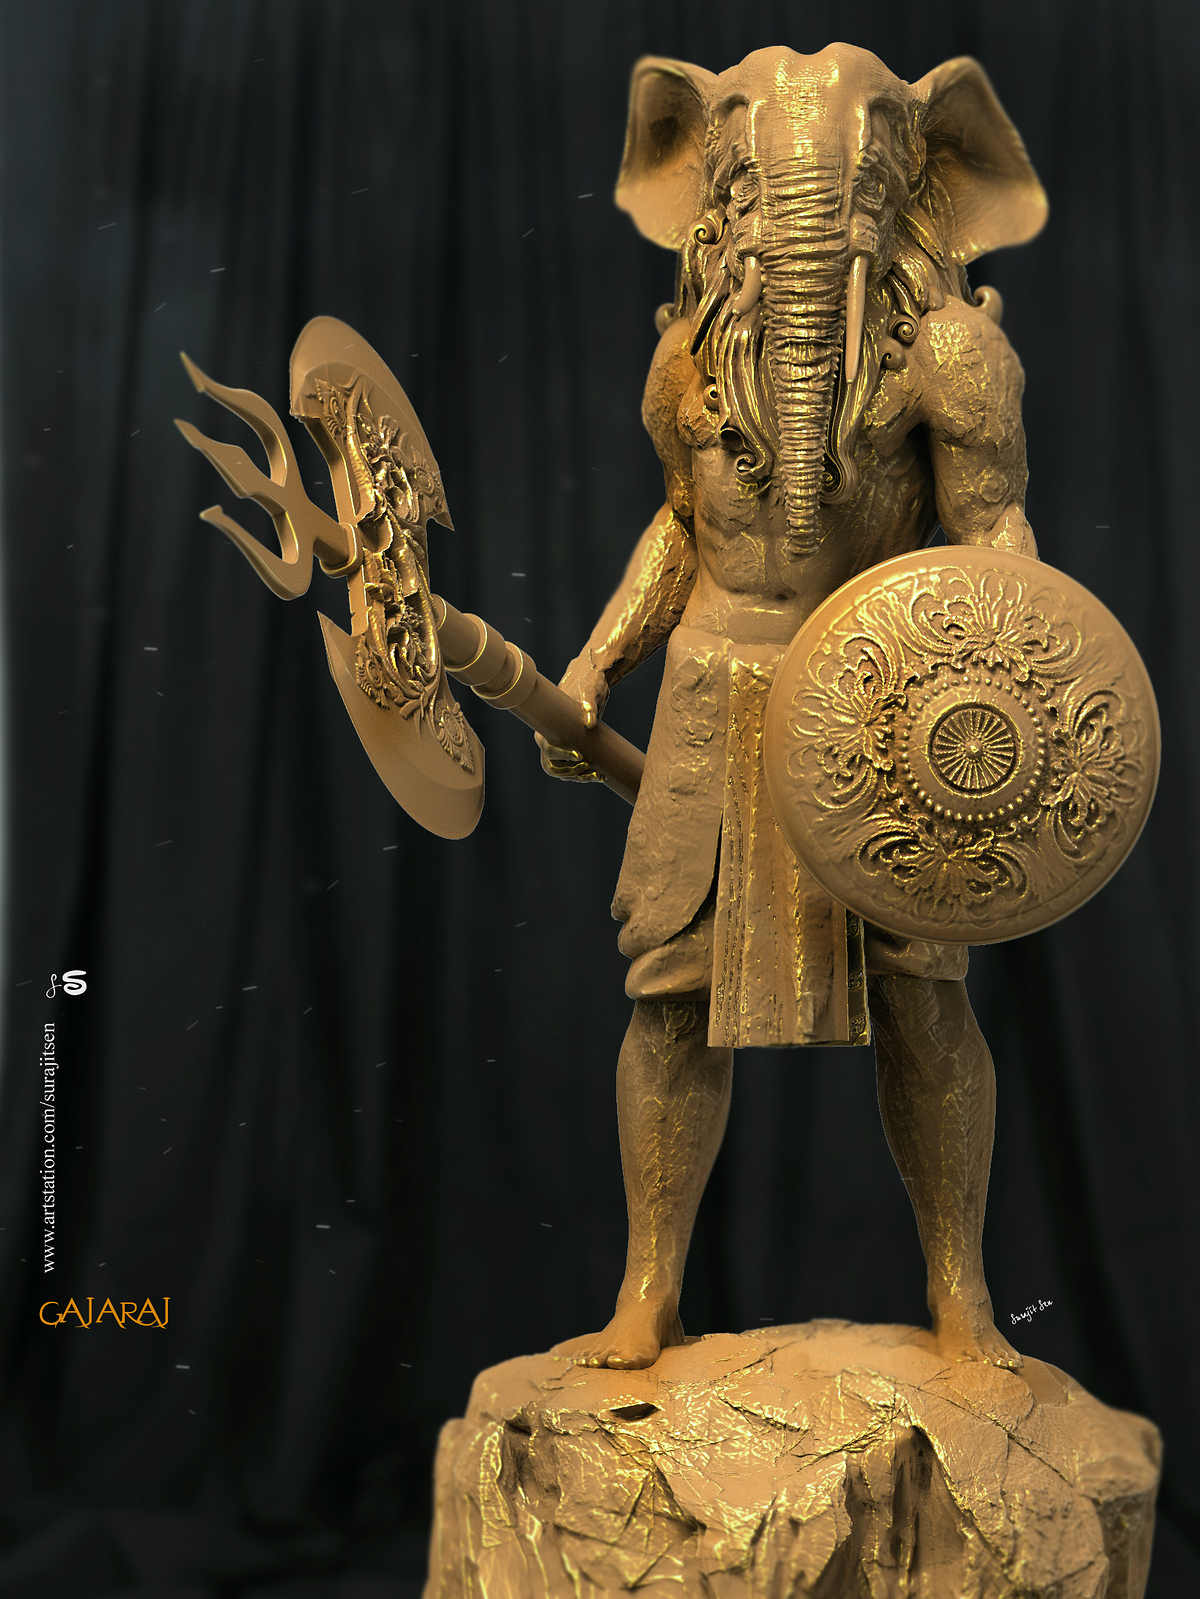 Gajaraj_Concept_Digital_SCulpture_SurajitSen_Nov2019